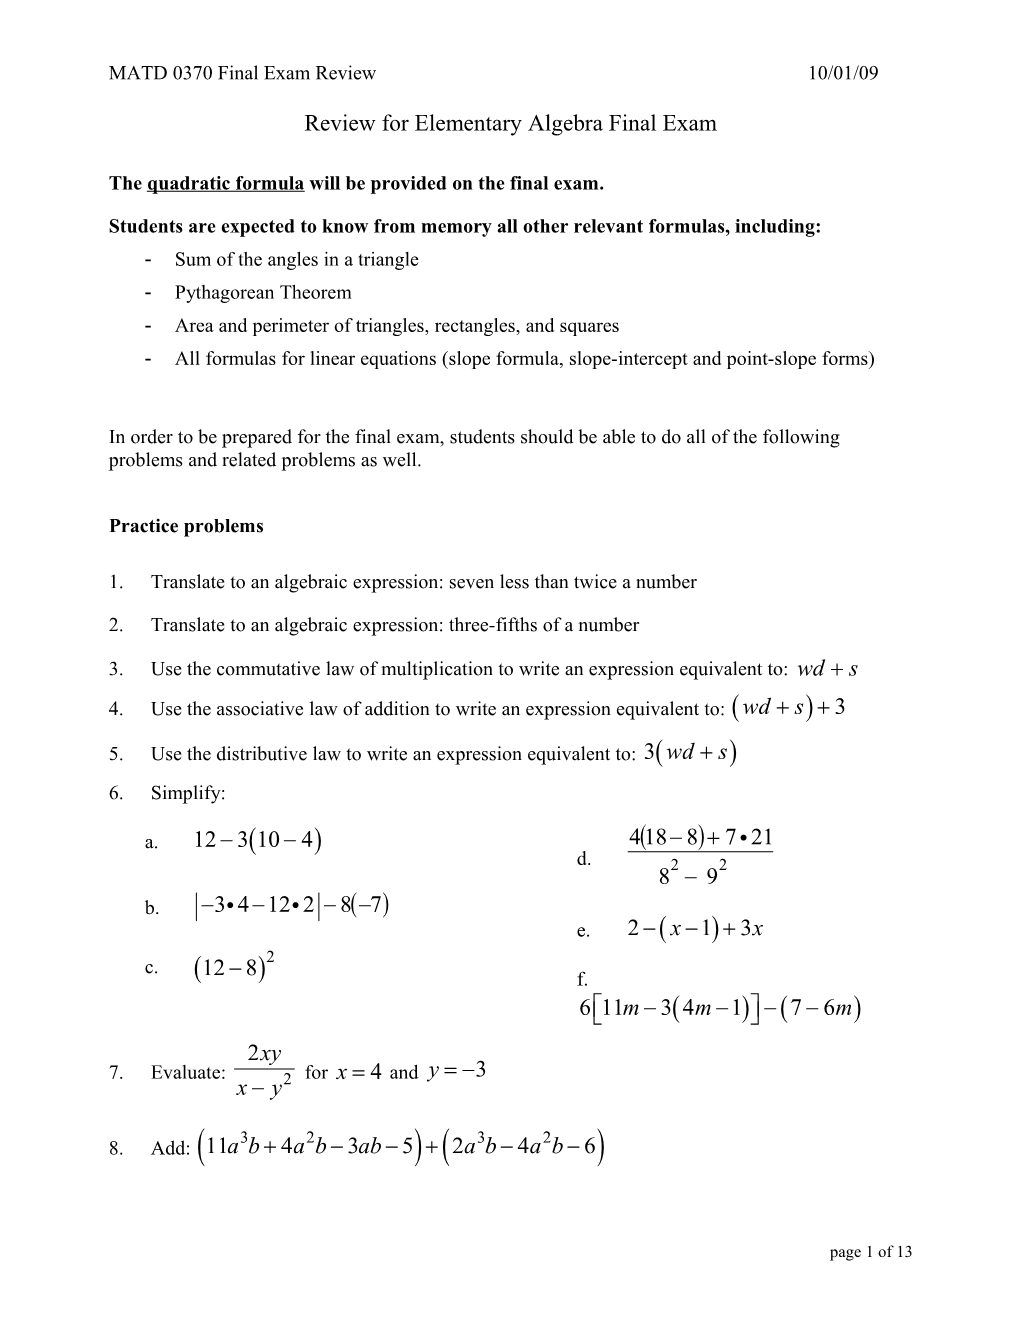 Review for Elementary Algebra Final Exam